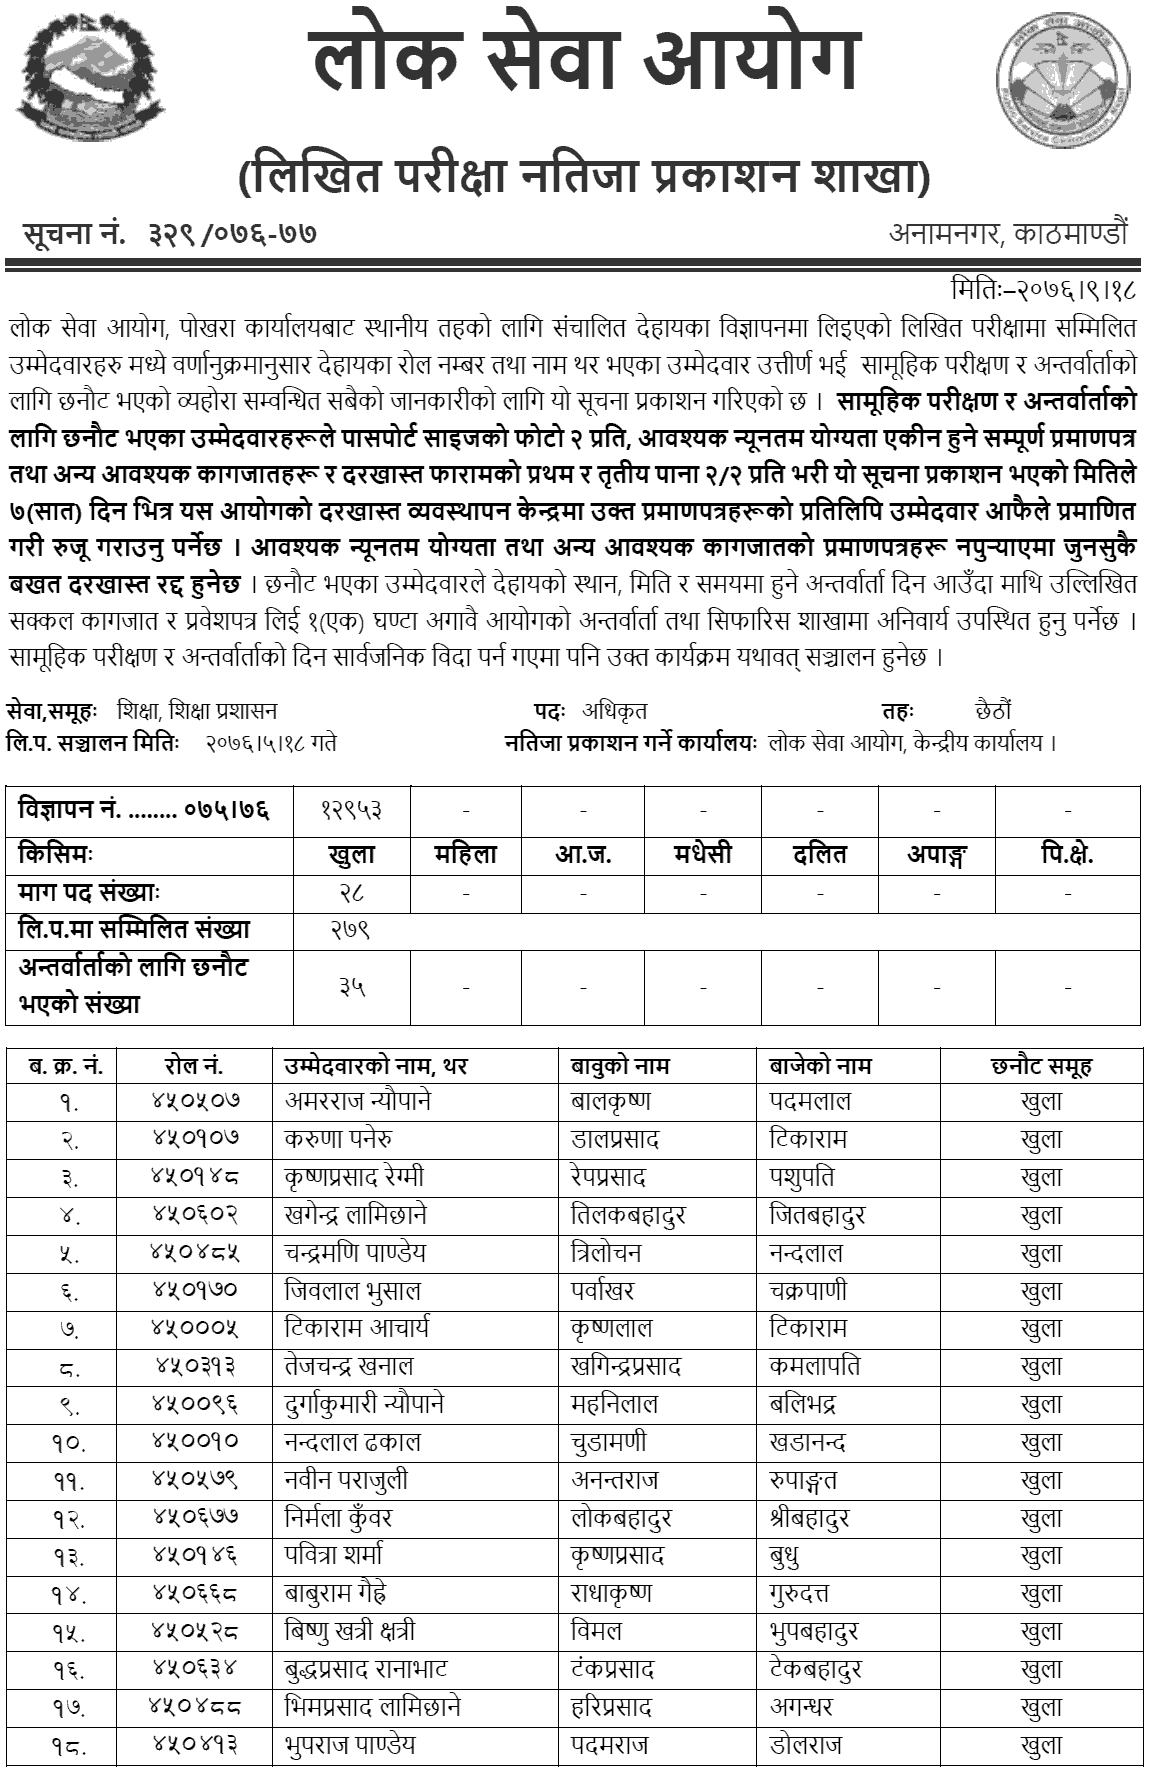 Lok Sewa Aayog Pokhara Local Level 6th Education Service Written Exam Result